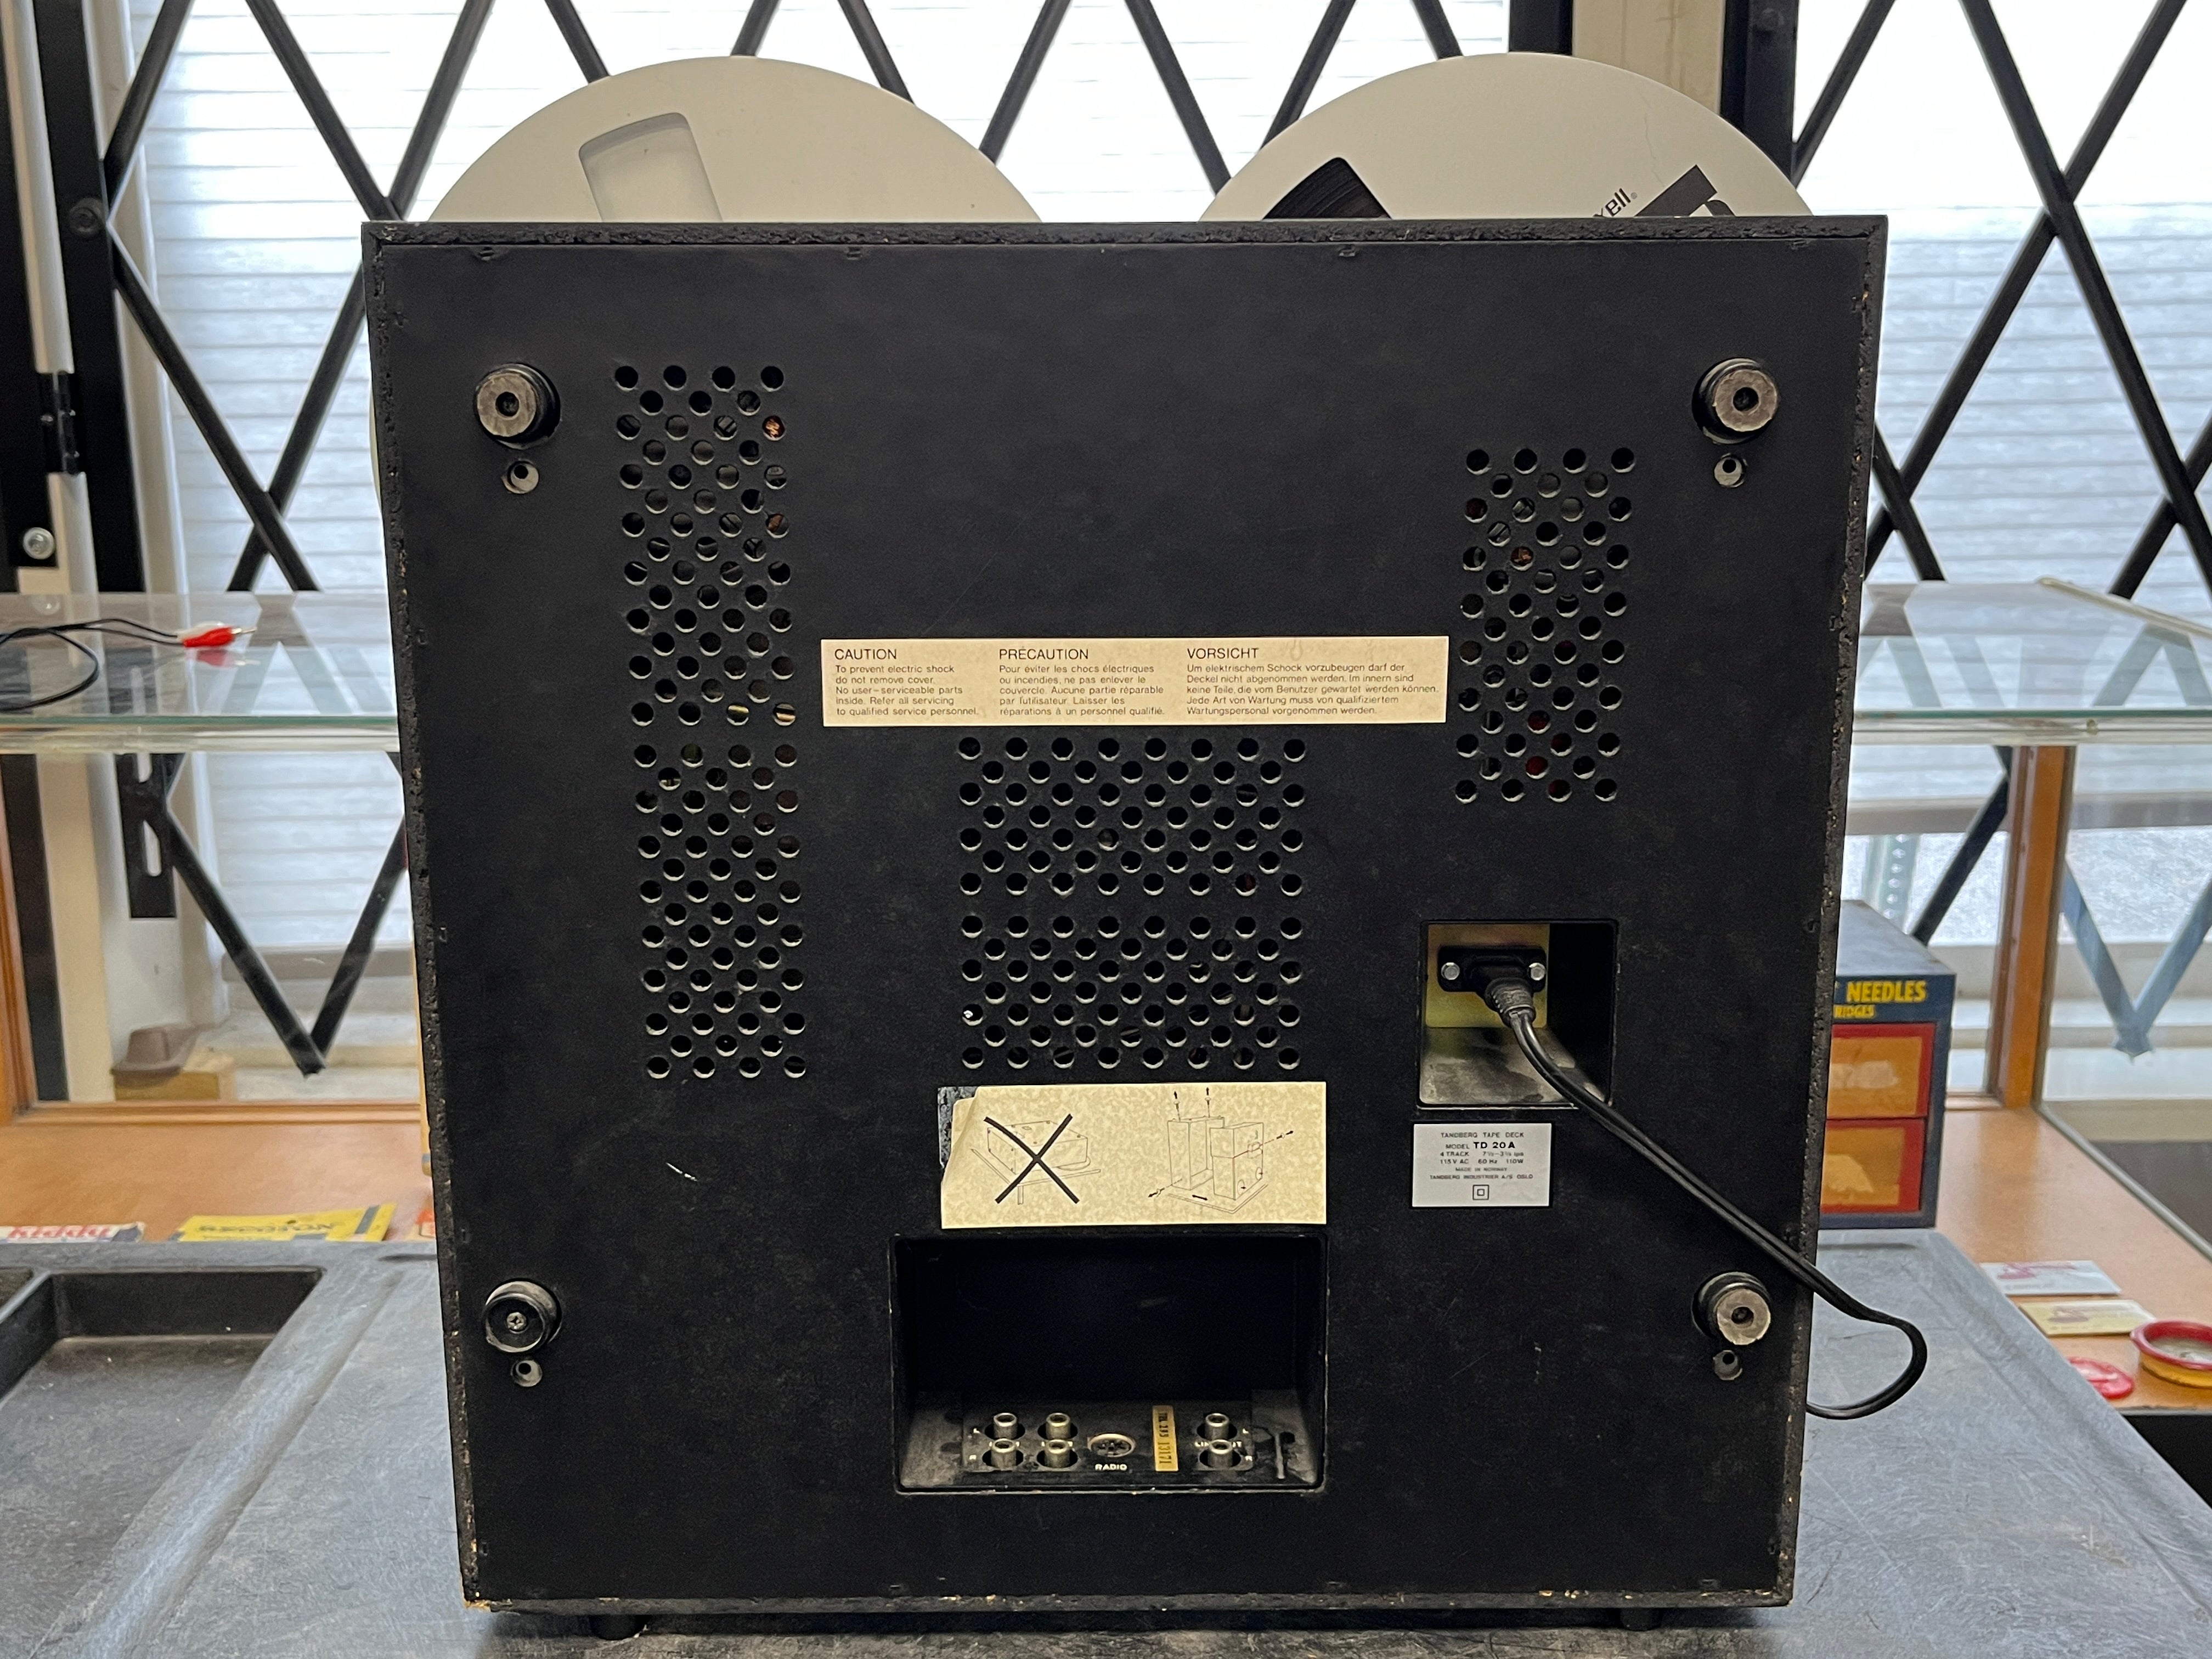 Tandberg TD 20A – Magnetic Tape Recorder